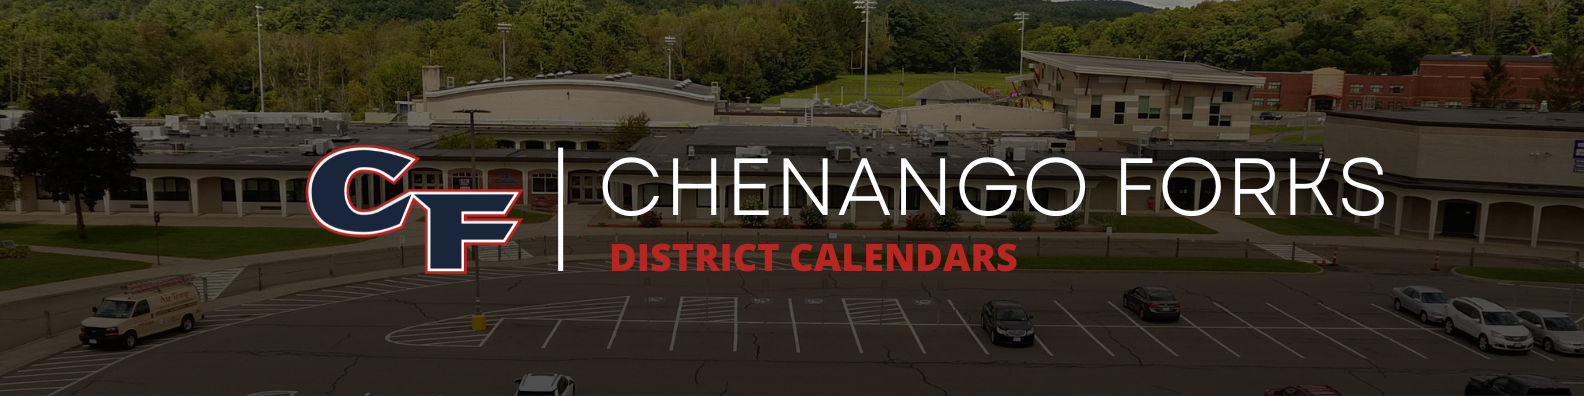 District Calendars 